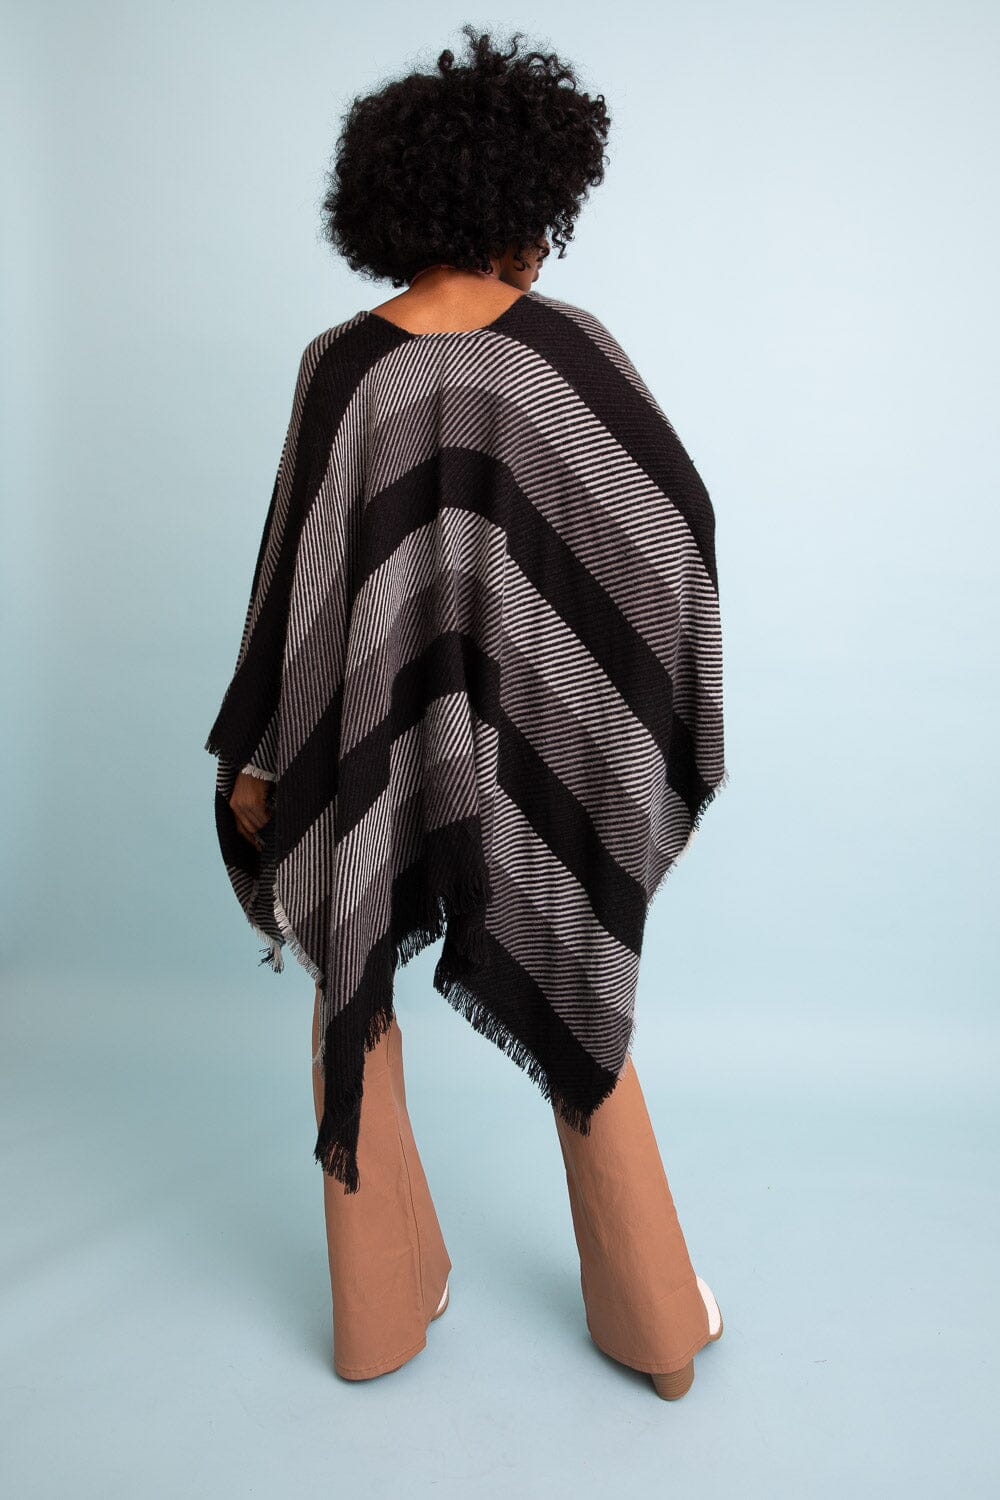 Cuddle Season Striped Knit Poncho Ponchos Leto Collection One Size Charcoal 